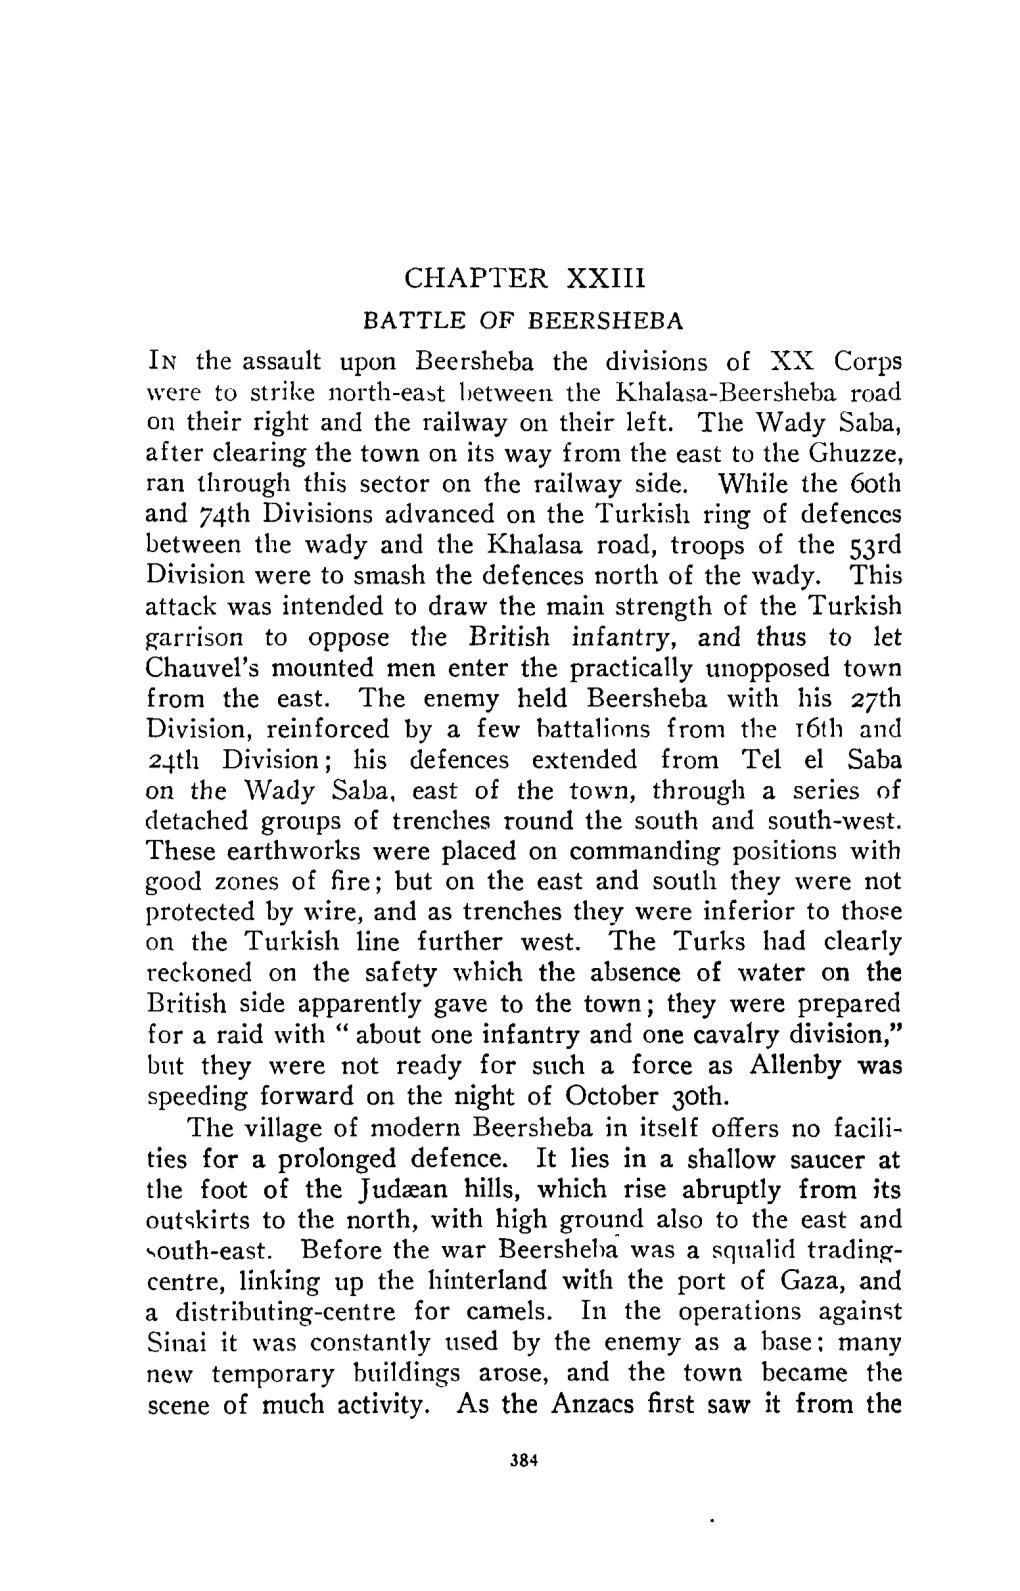 The Battle of Beersheba